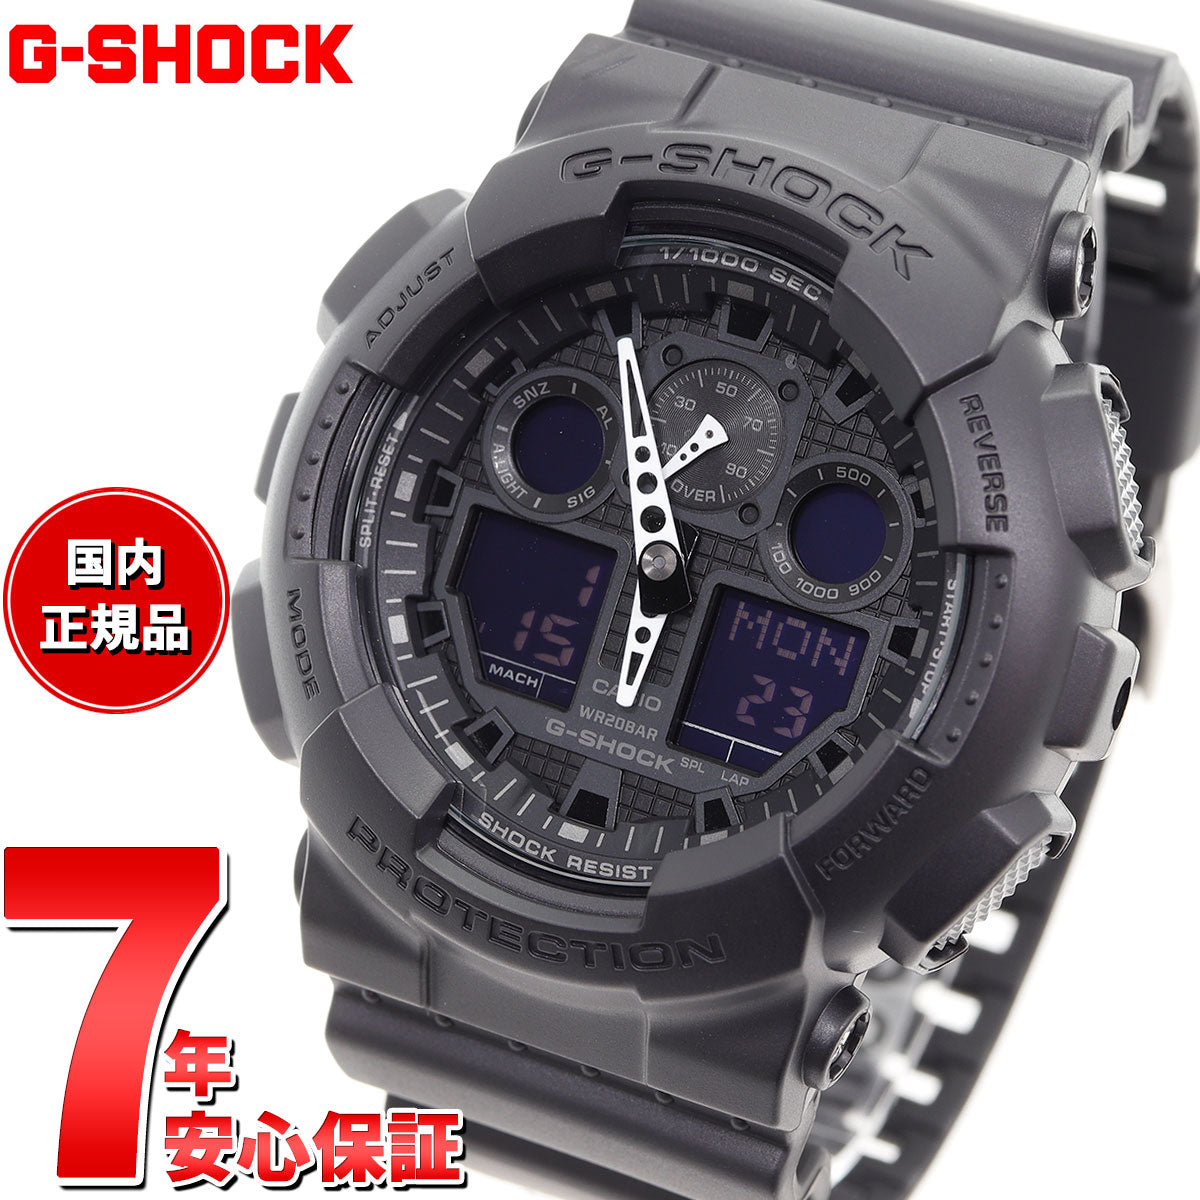 G-SHOCK GA-100-1A1JF カシオ Gショック 腕時計 メンズ アナデジ G-SHOCK GA-100-1A1JF